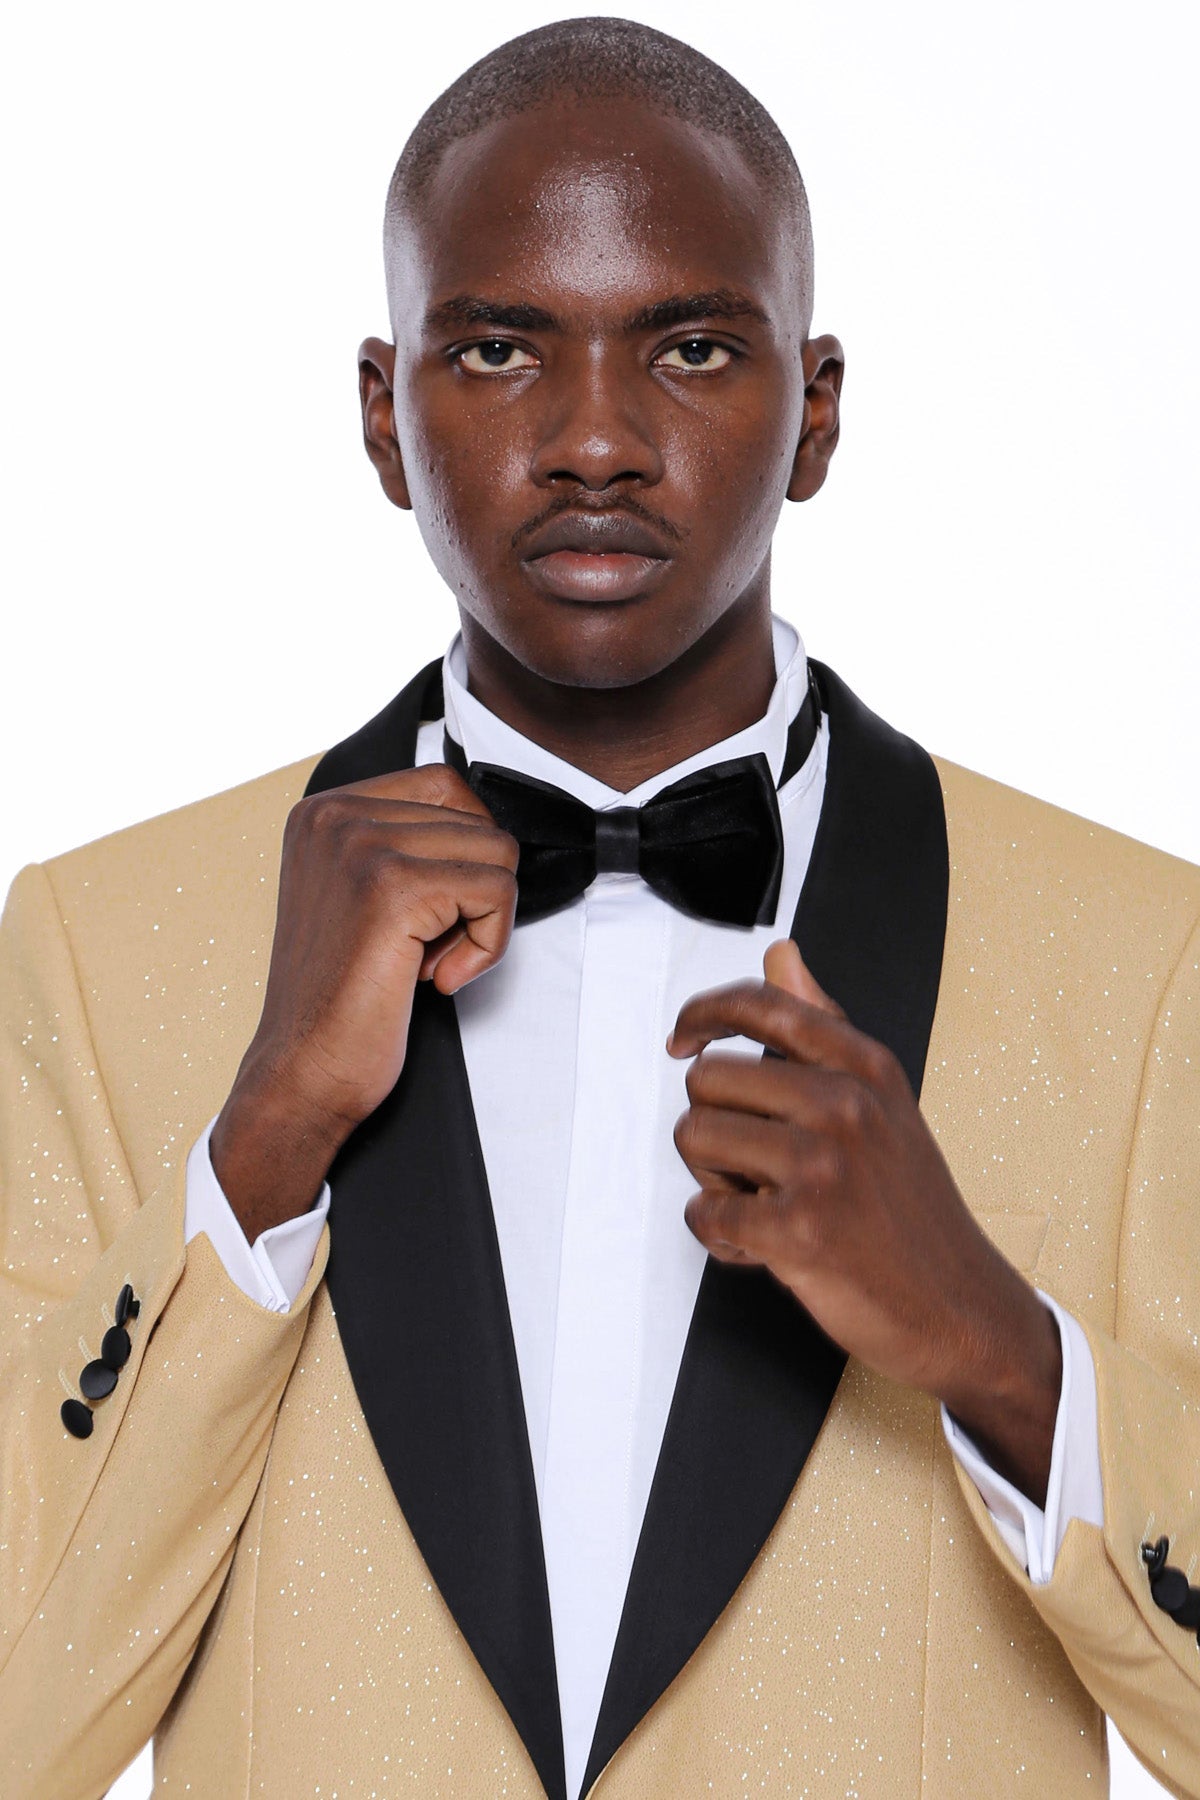 KCT Menswear - Men's Gold Sparkle Prom Blazer with Peak Black Satin Lapel 